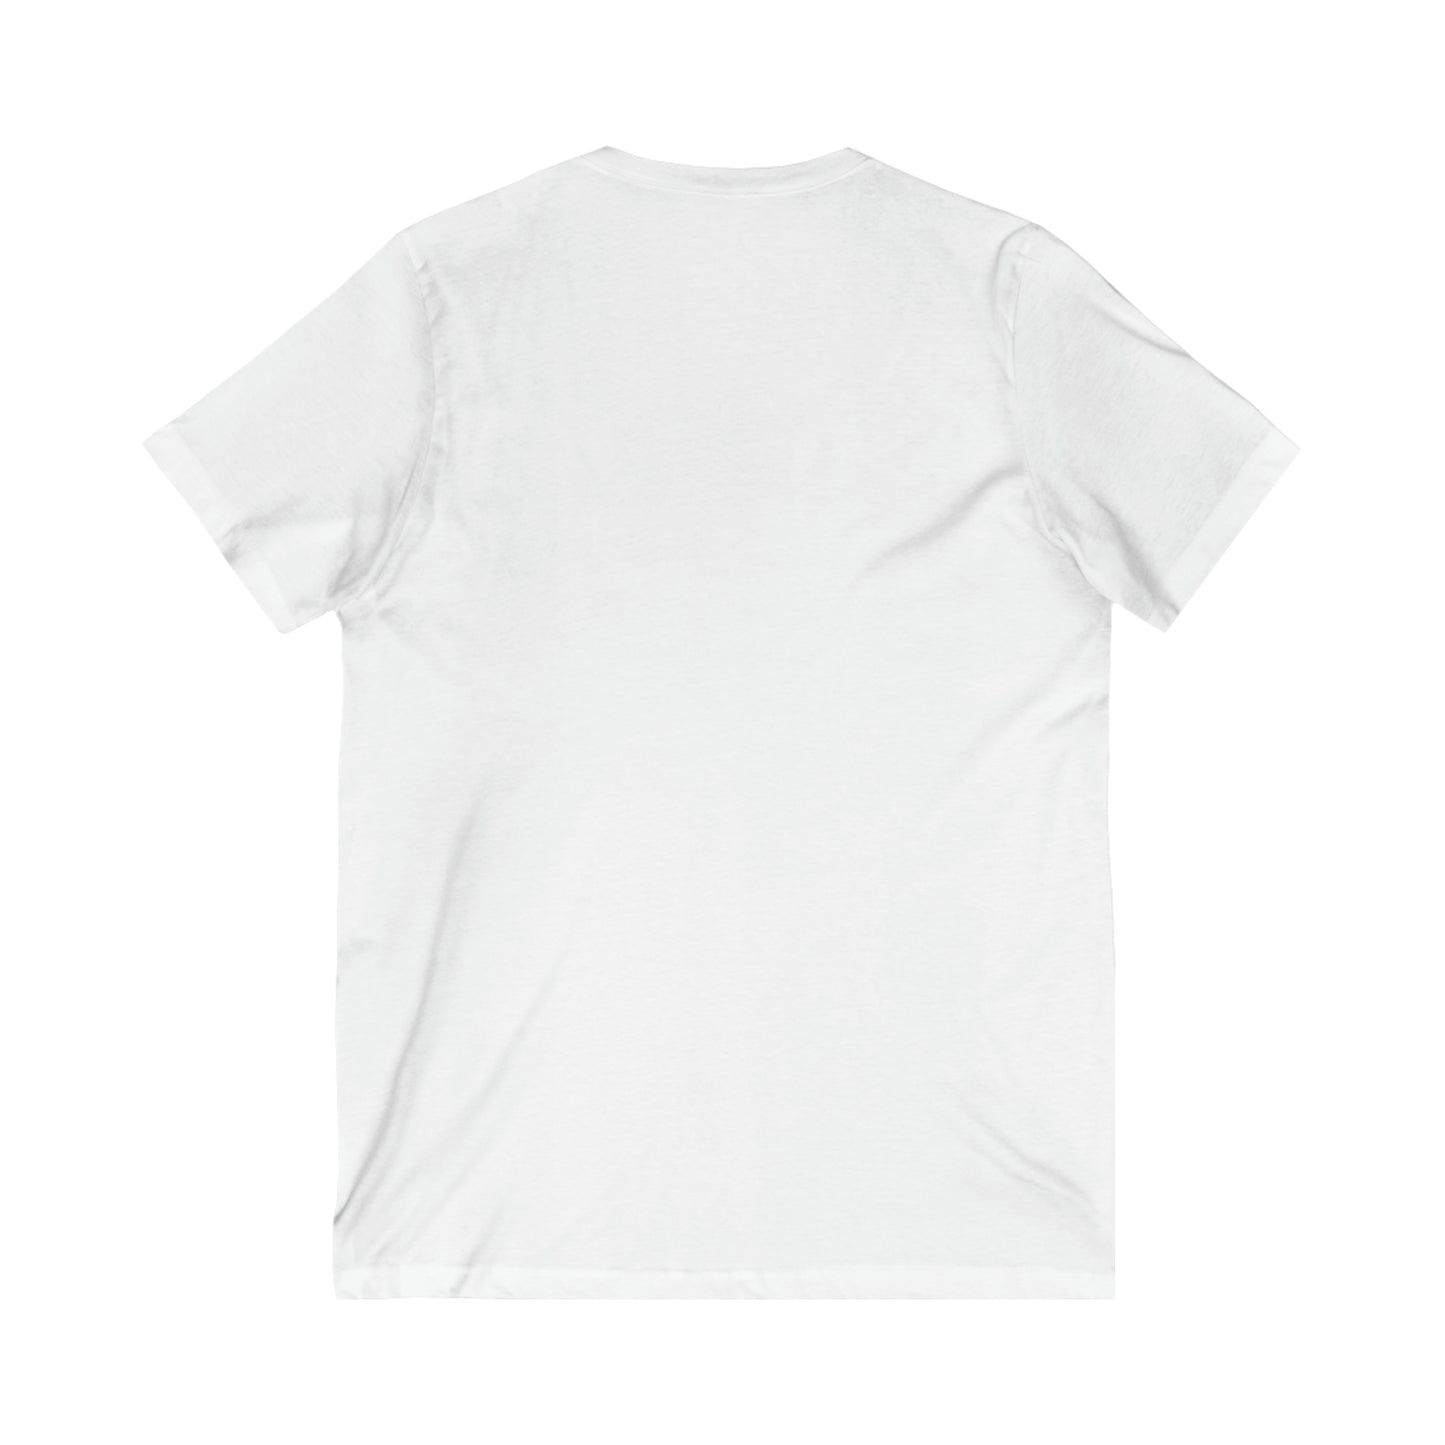 Classic Tech Seal - Men's V-Neck T-Shirt